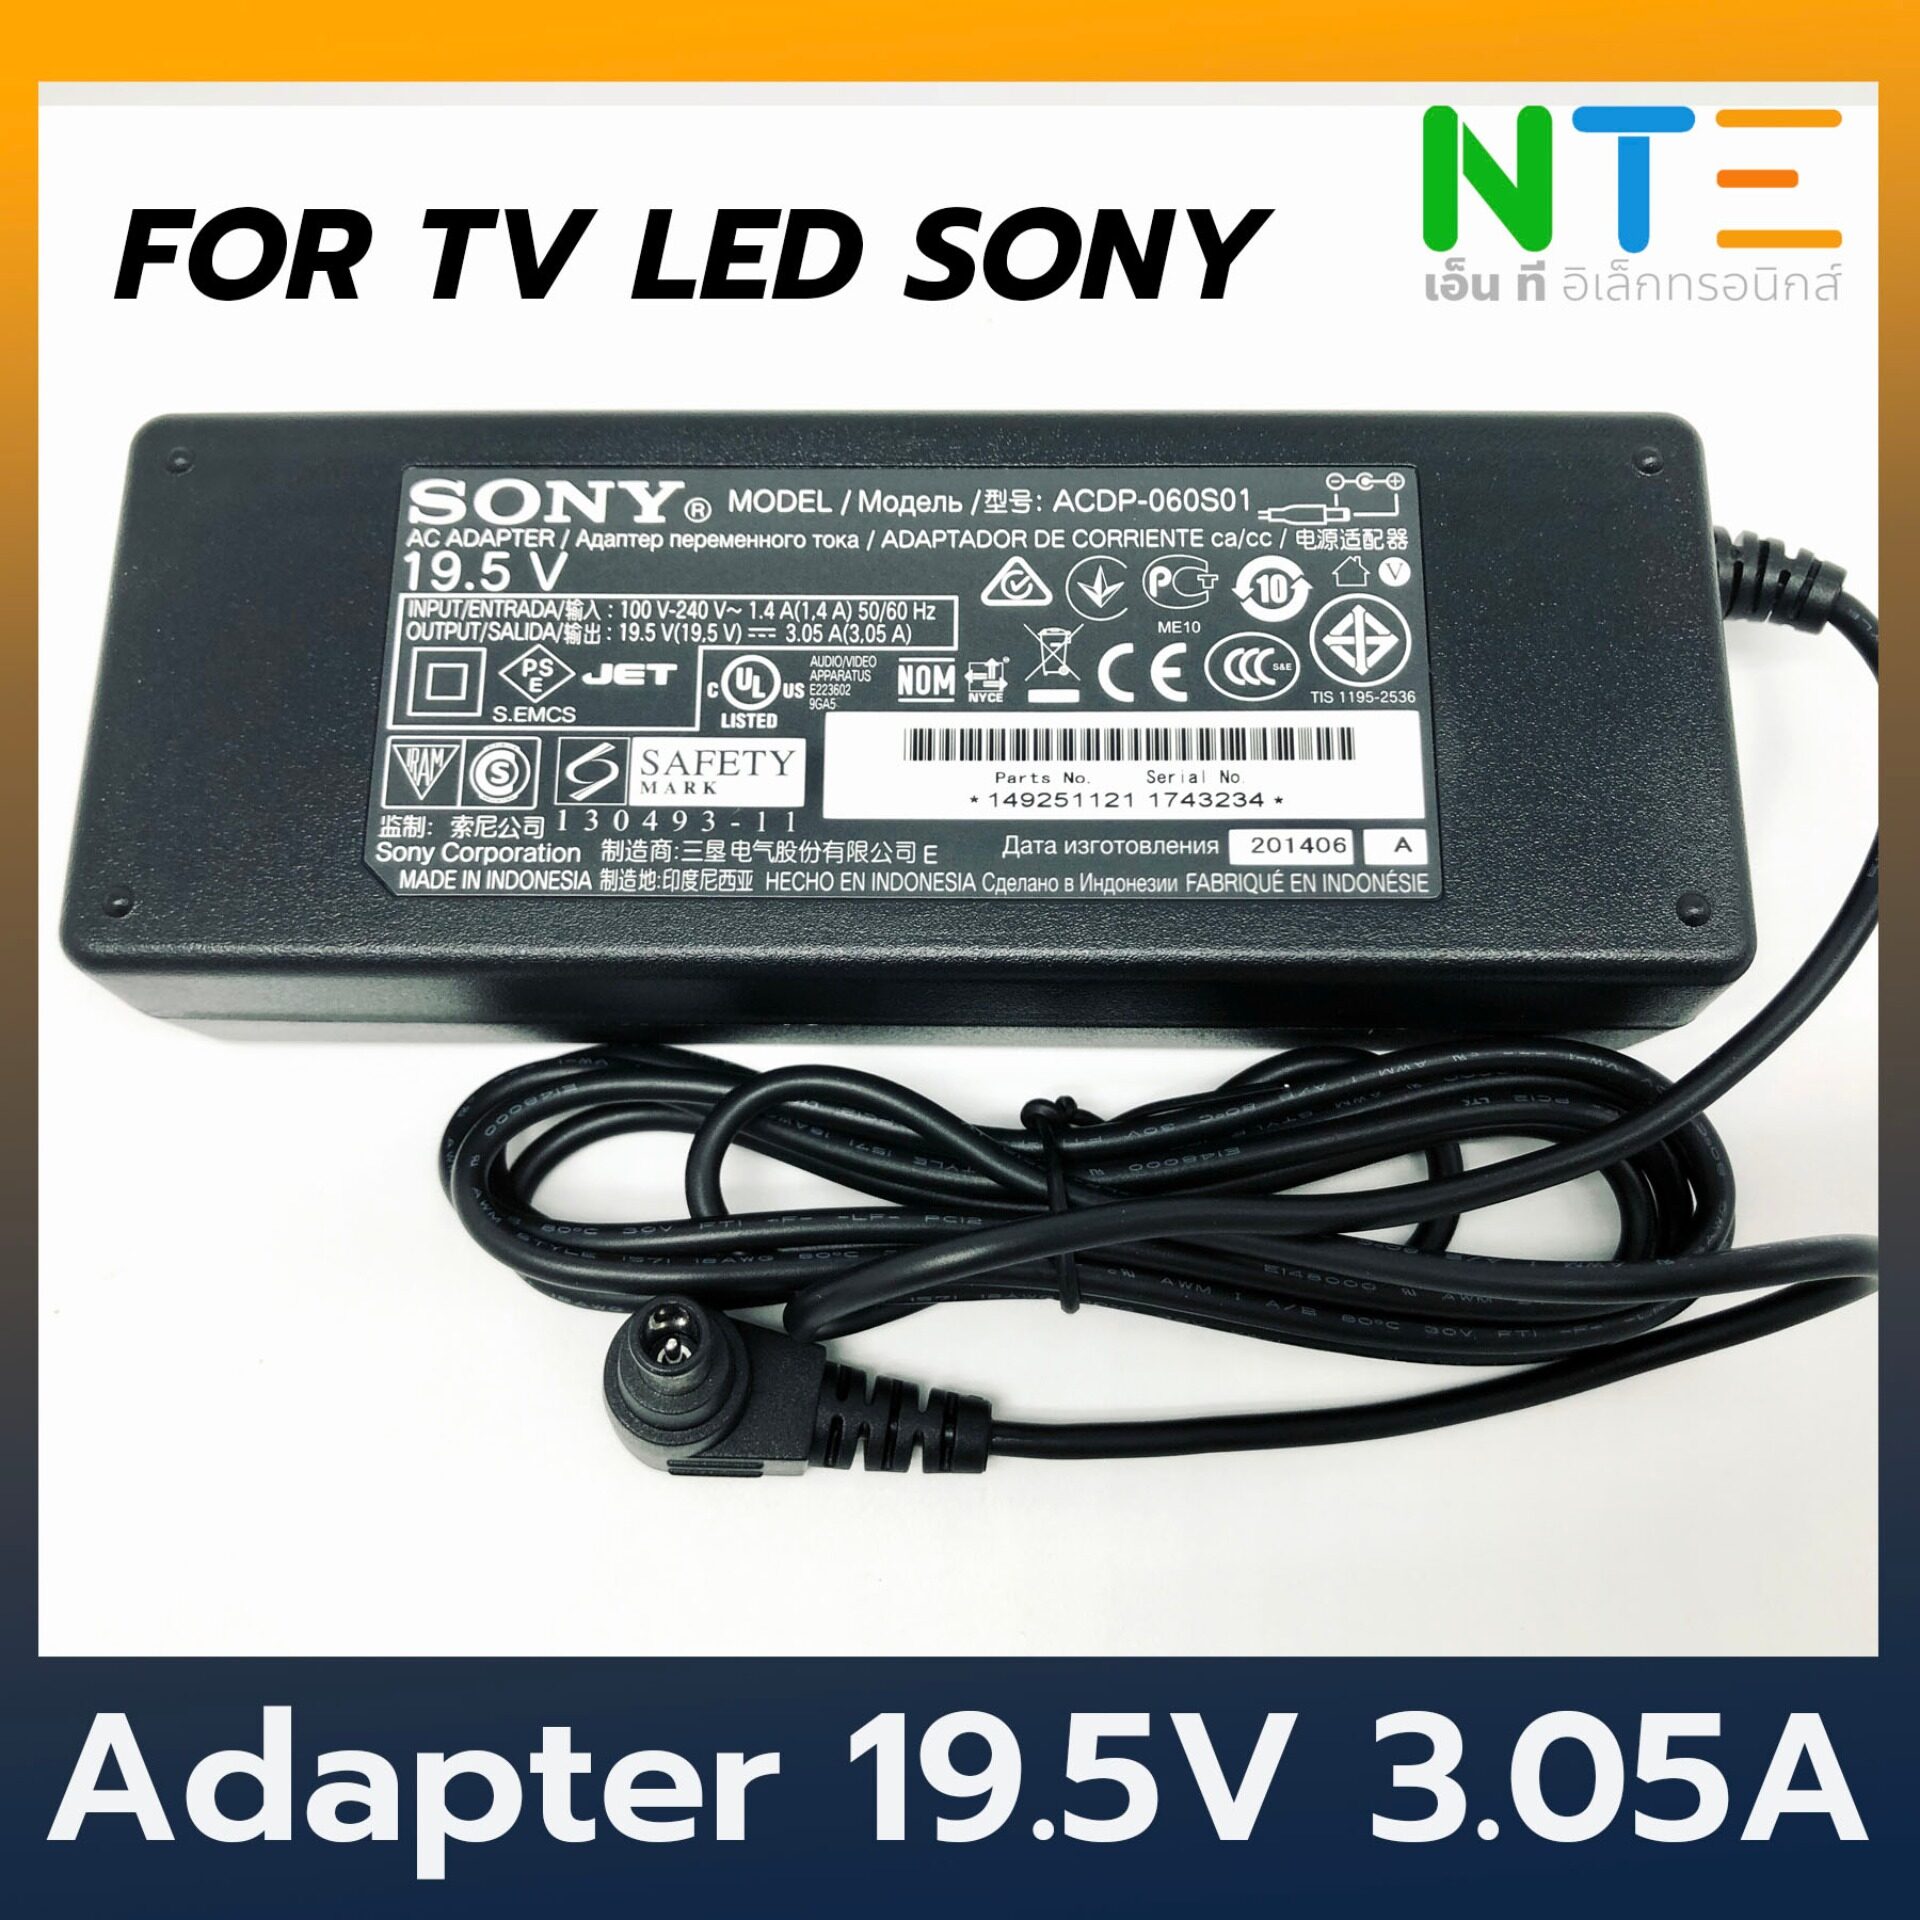 Adapter Sony 19.5V 3.05A ใช้สำหรับ TV LCD SONY 40 นิ้ว KDL-40W650D KDL-32R430B